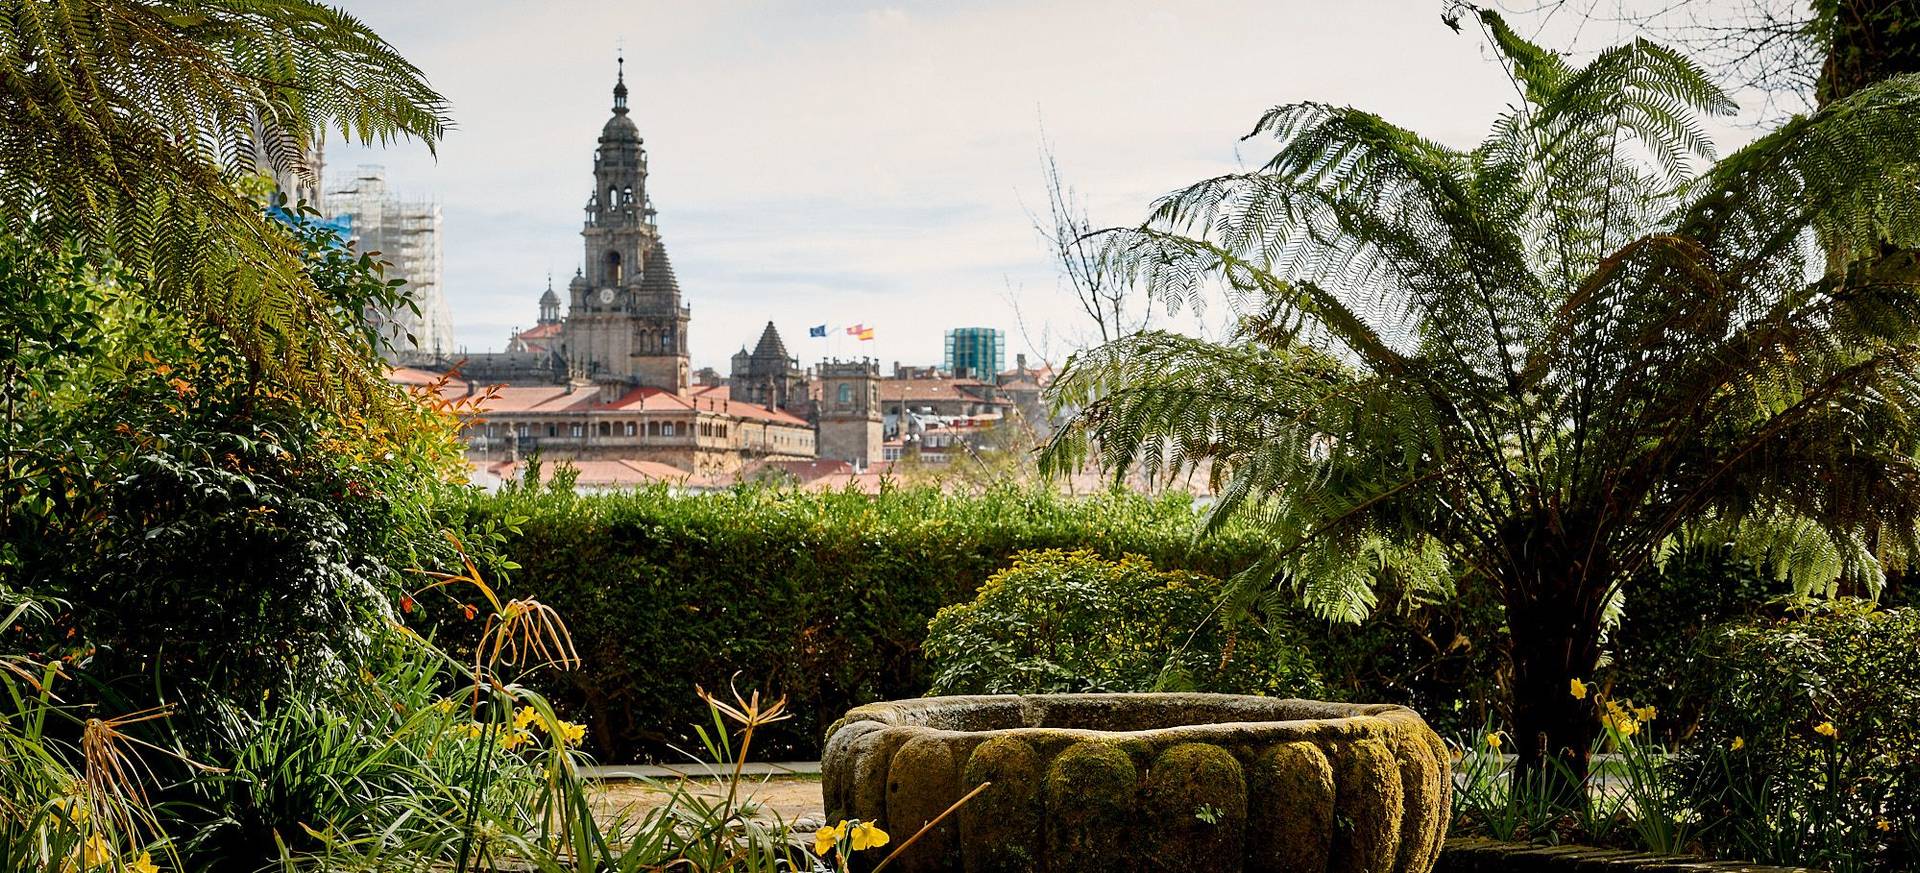 Santiago de Compostela – on the trail of the scallop